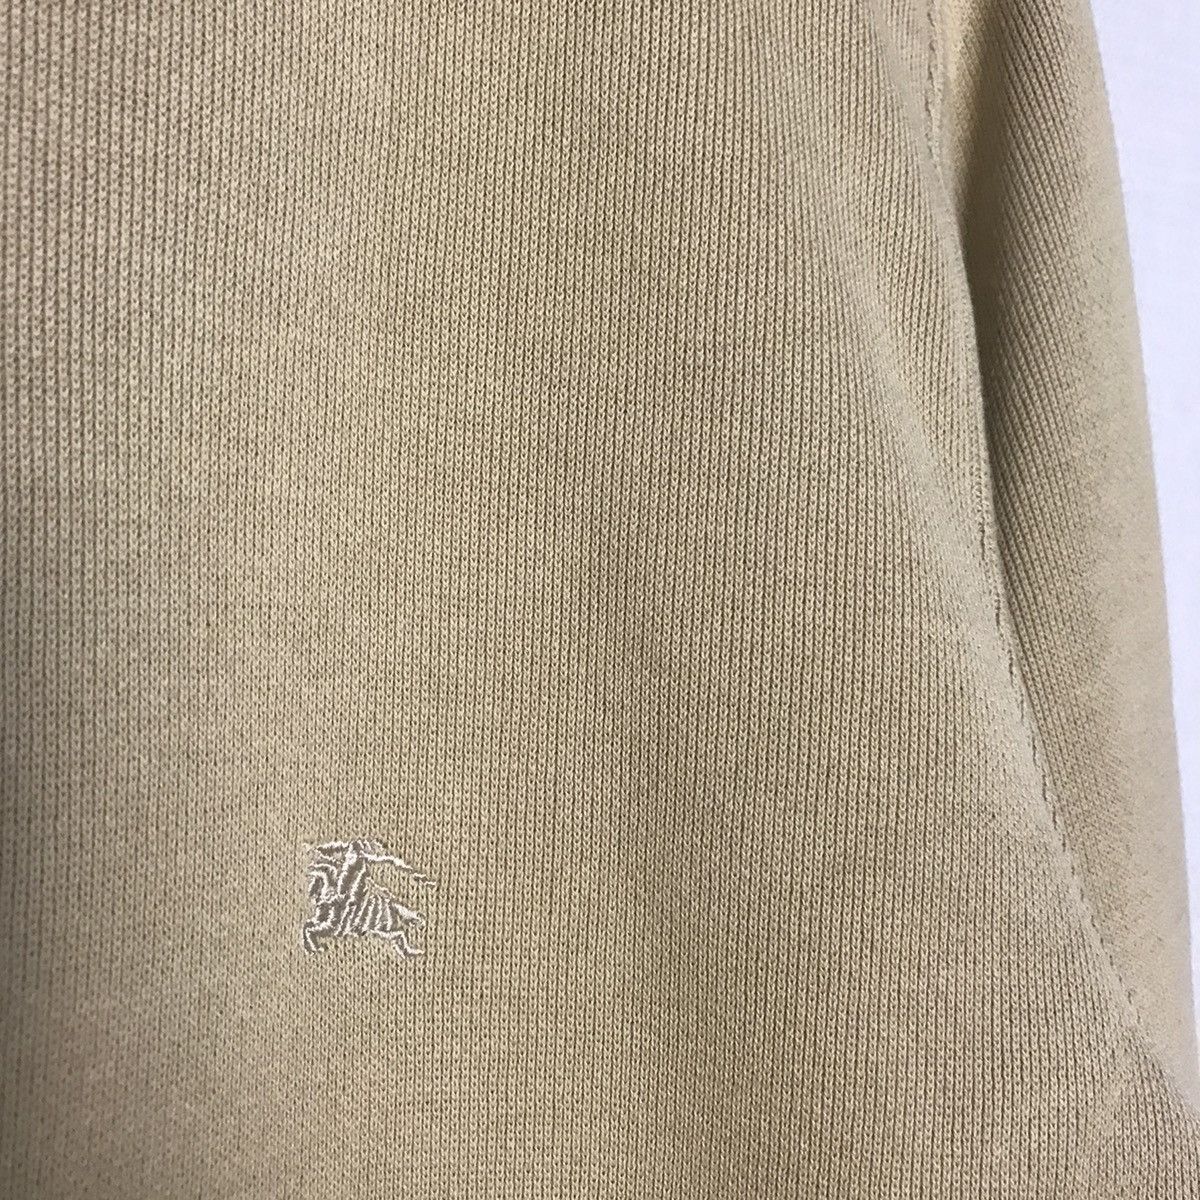 burberry nova check zipper sweater - 4